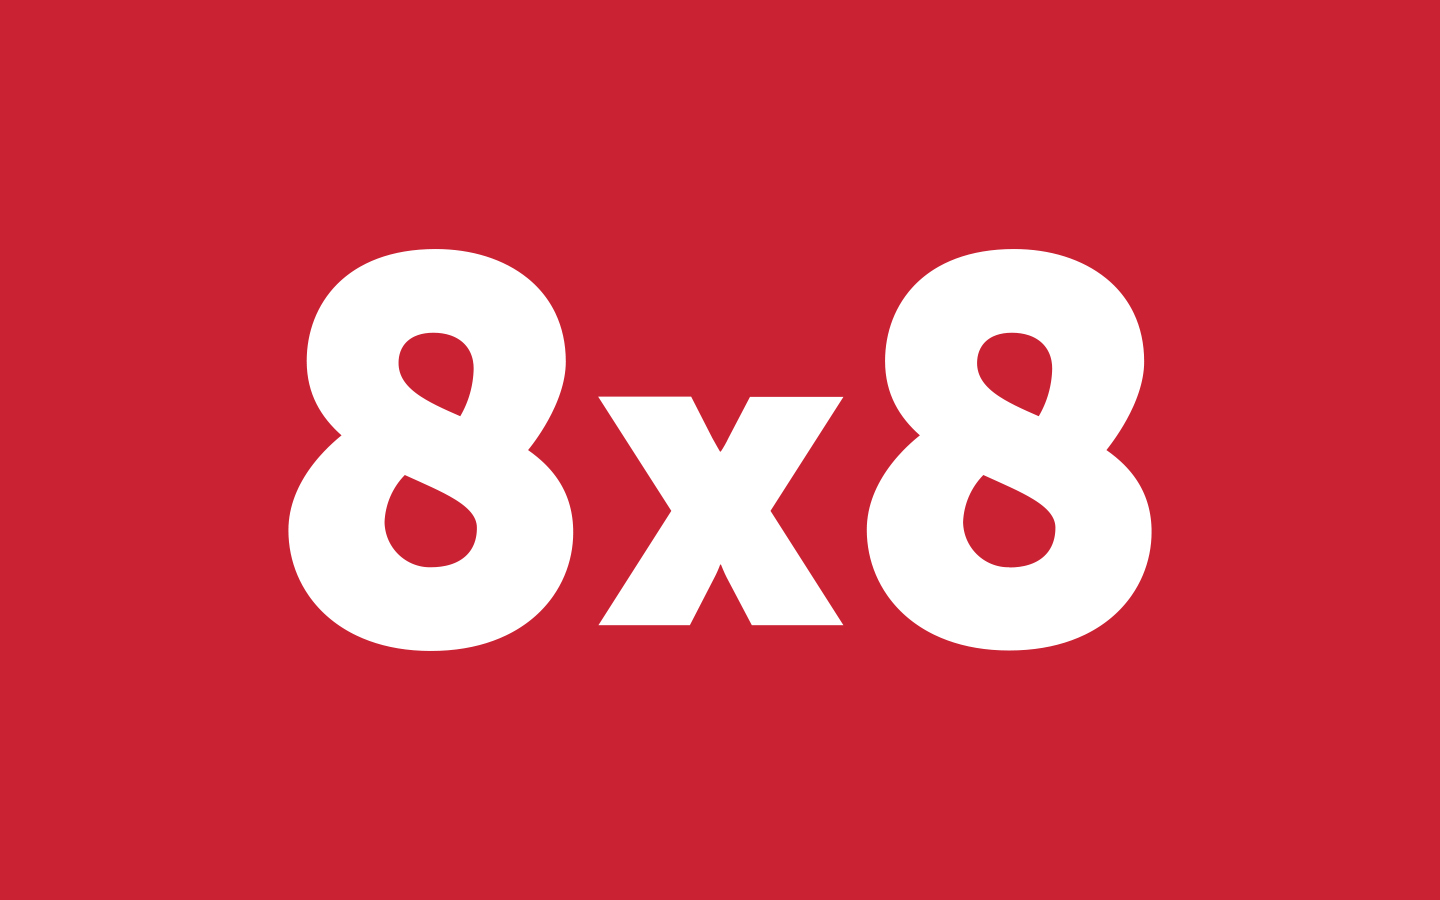 8x8 Red Logo